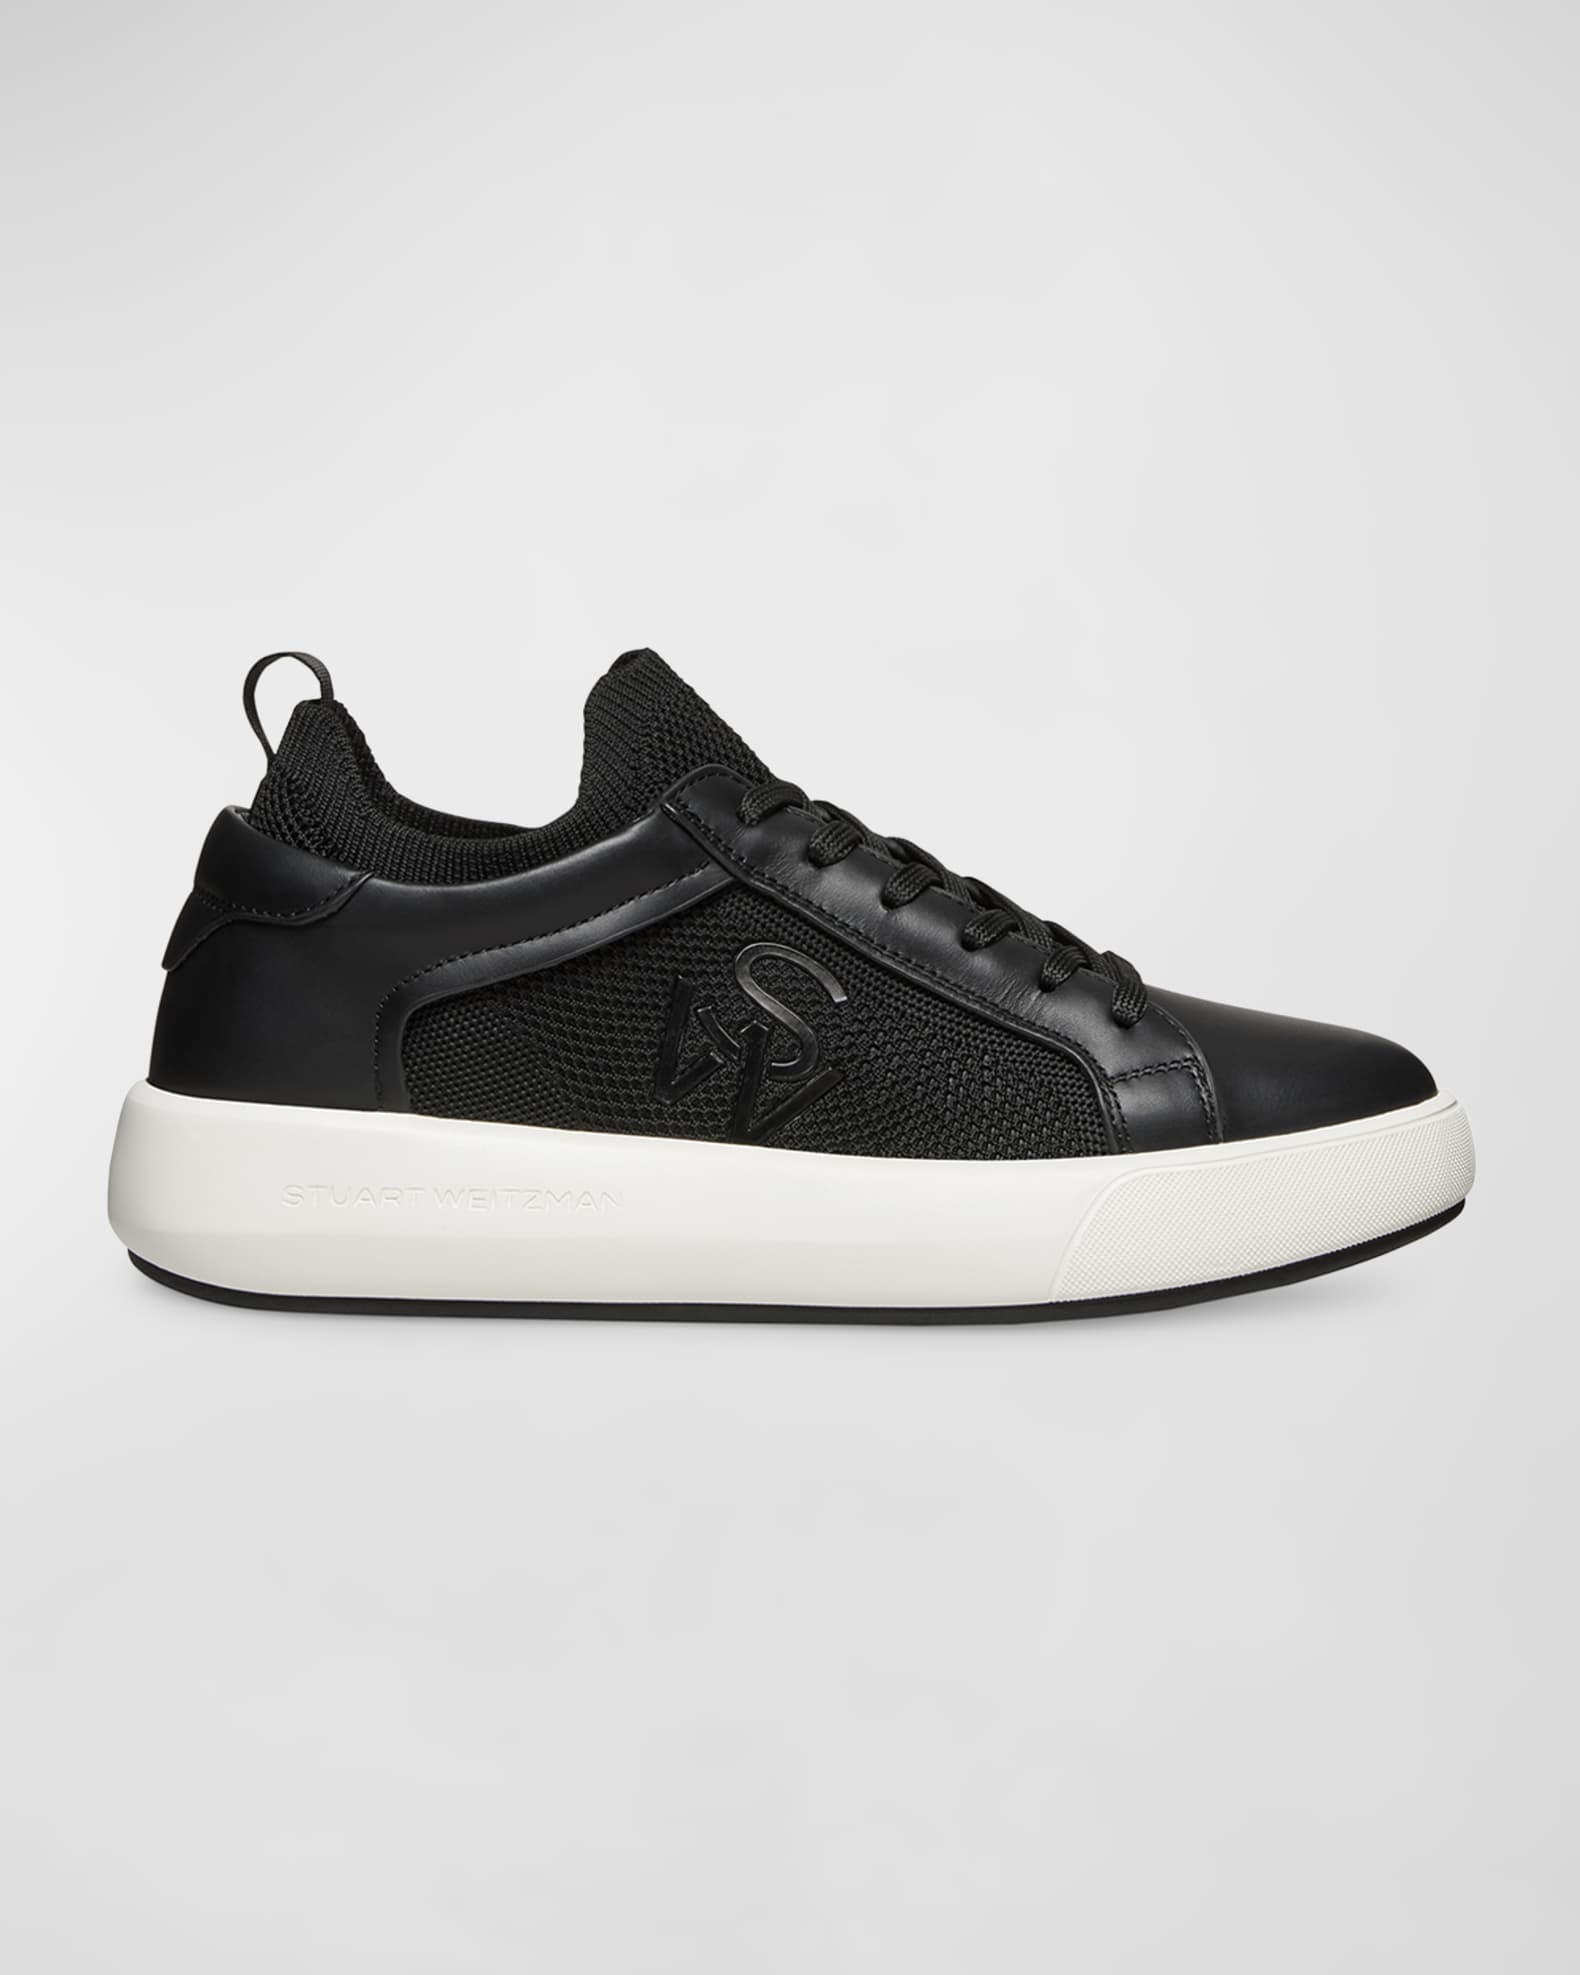 Stuart Weitzman 5050 Pro Leather Knit Low-Top Sneakers | Neiman Marcus